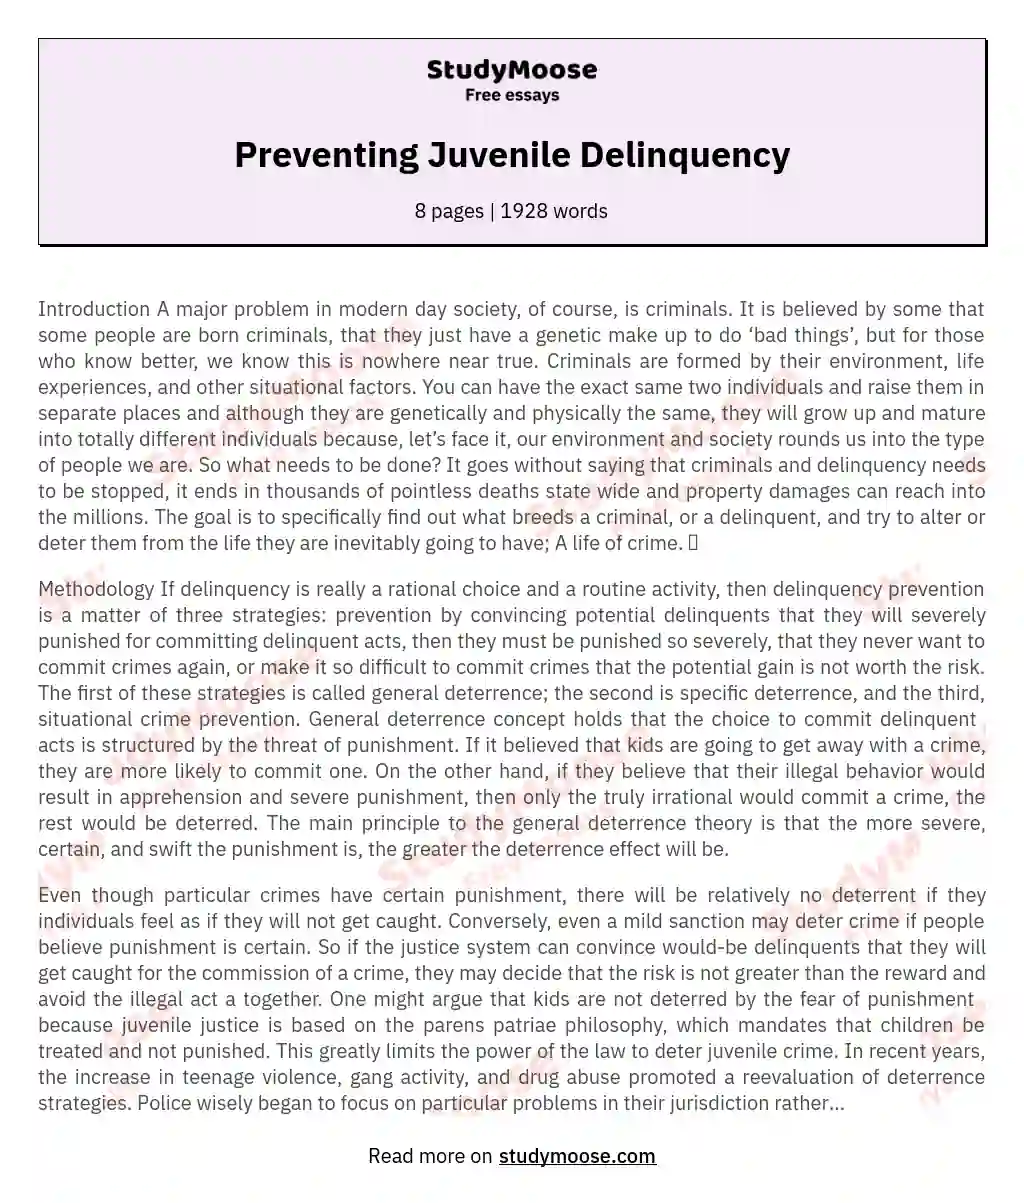 solutions of juvenile delinquency essay